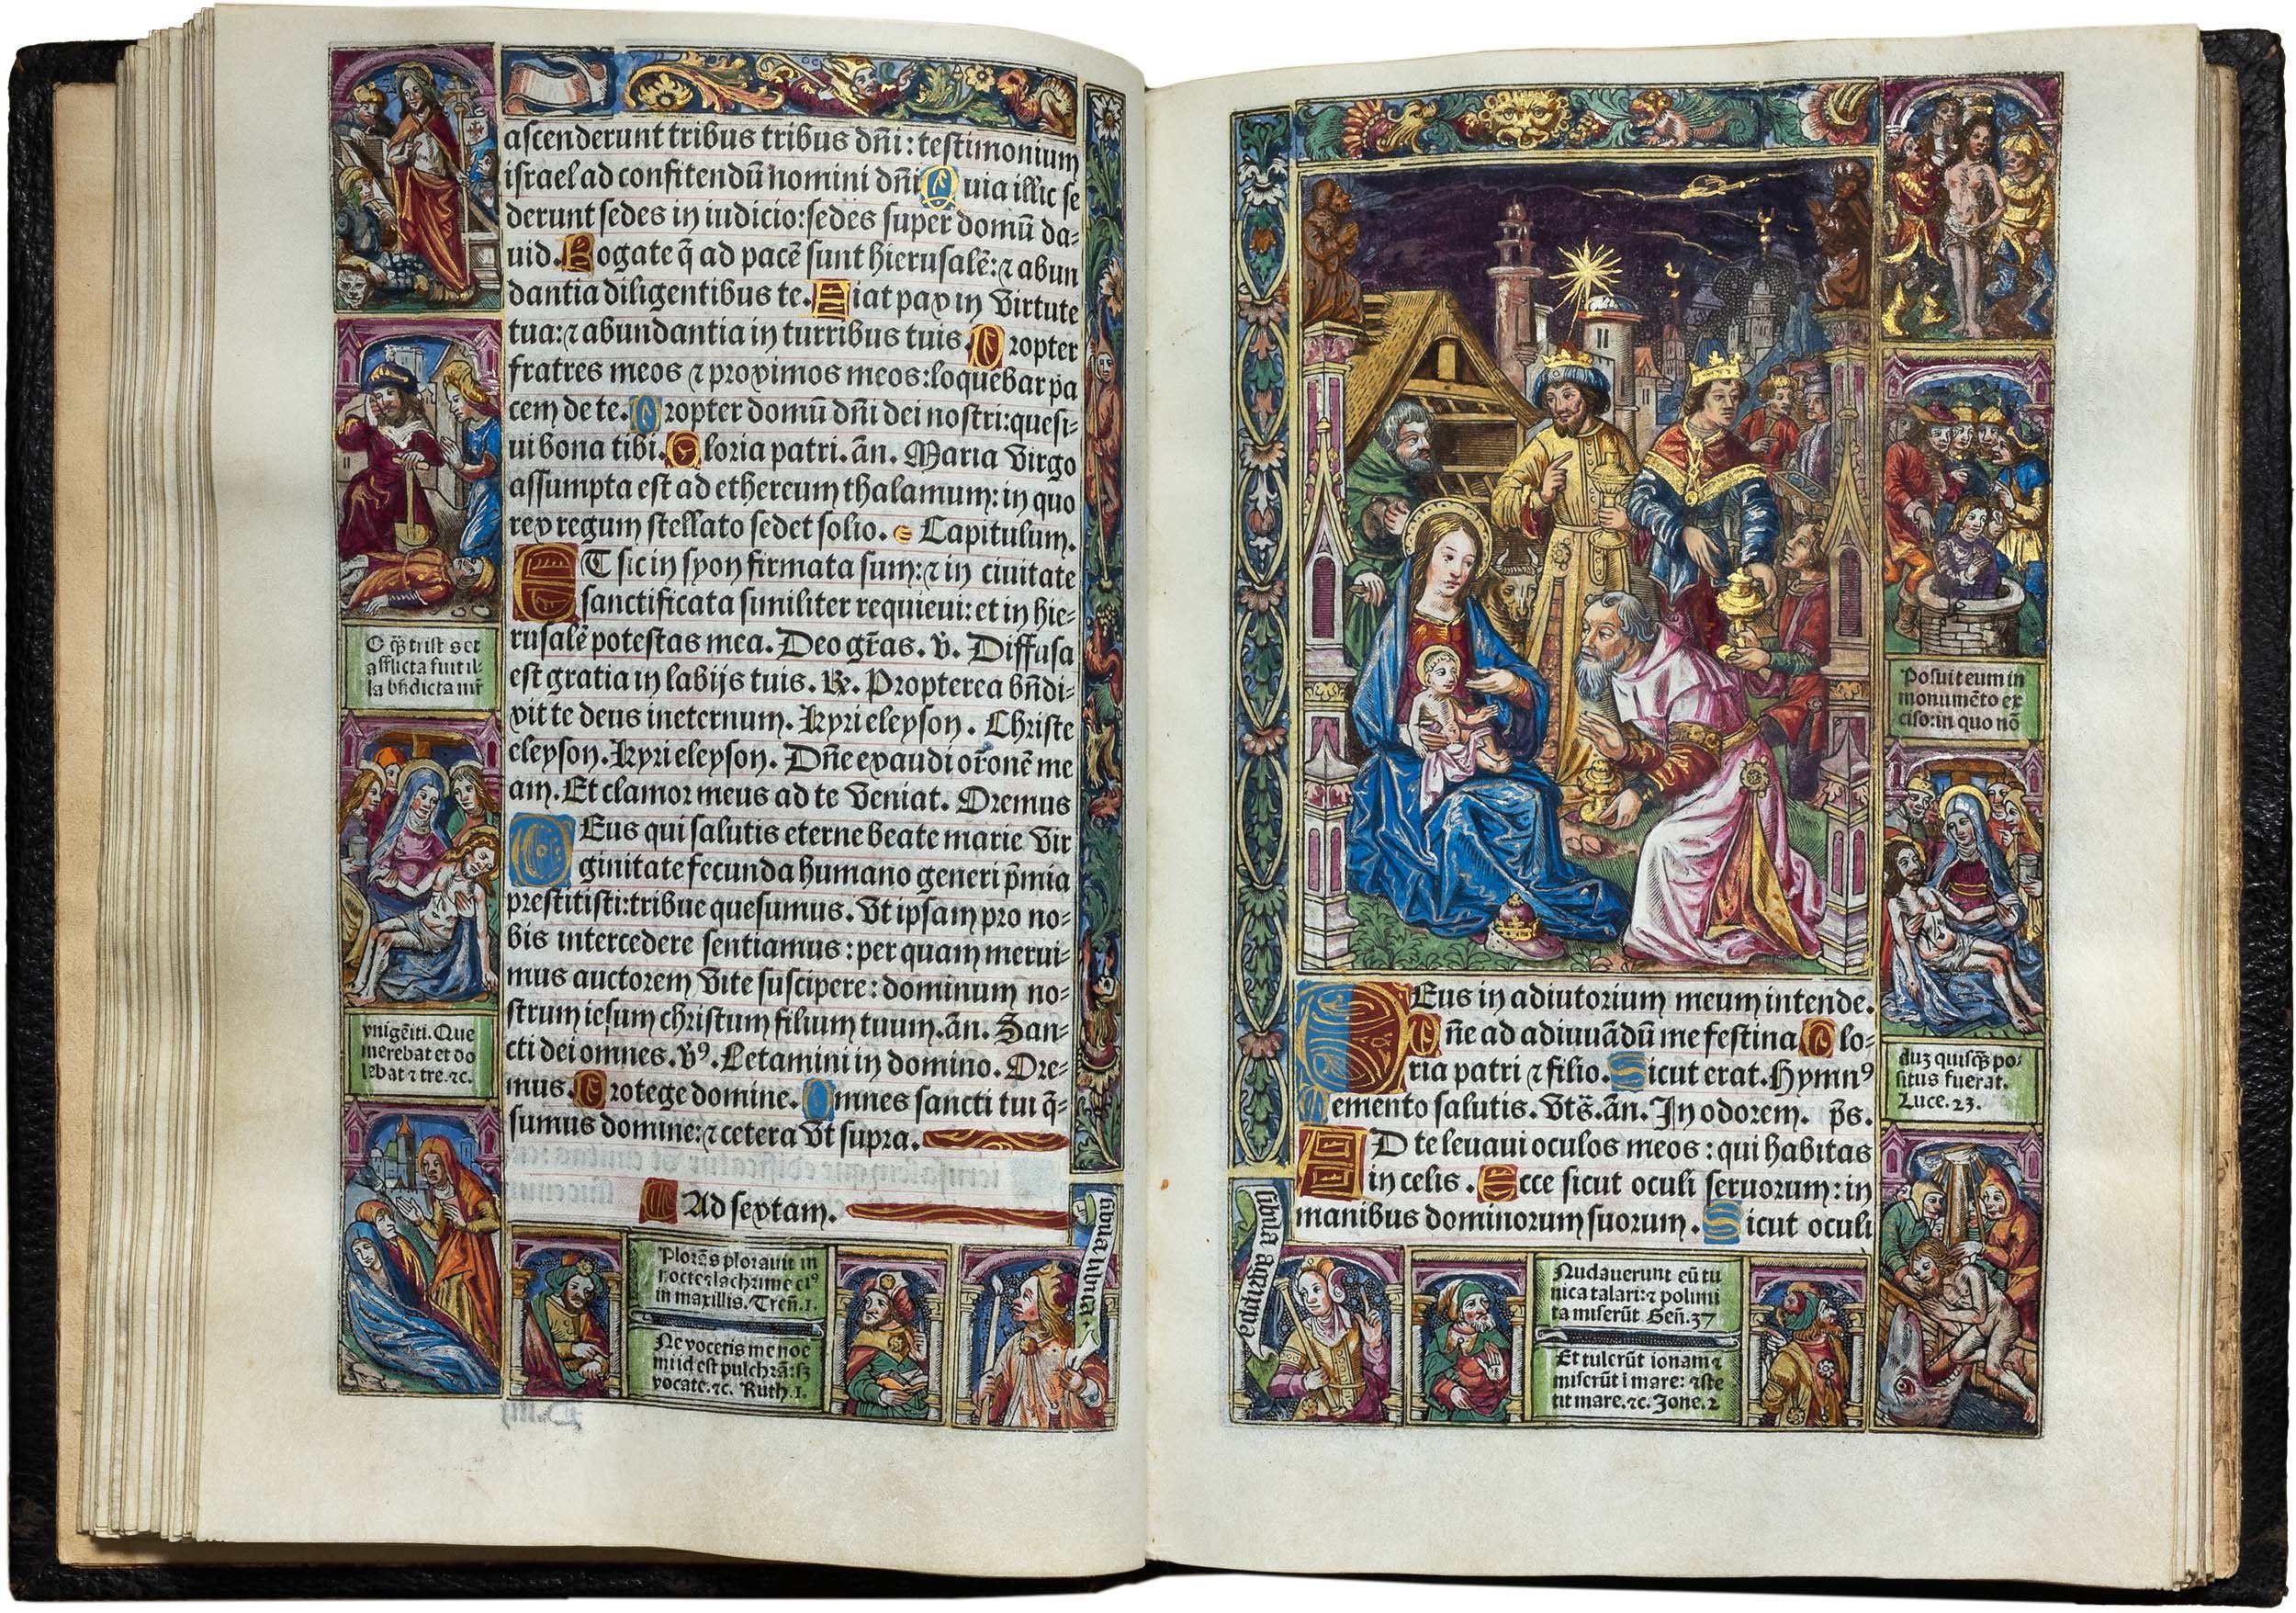 Printed-Book-of-Hours-10-january-1503-horae-bmv-kerver-remacle-illuminated-vellum-copy-schönborn-buchheim-32.jpg